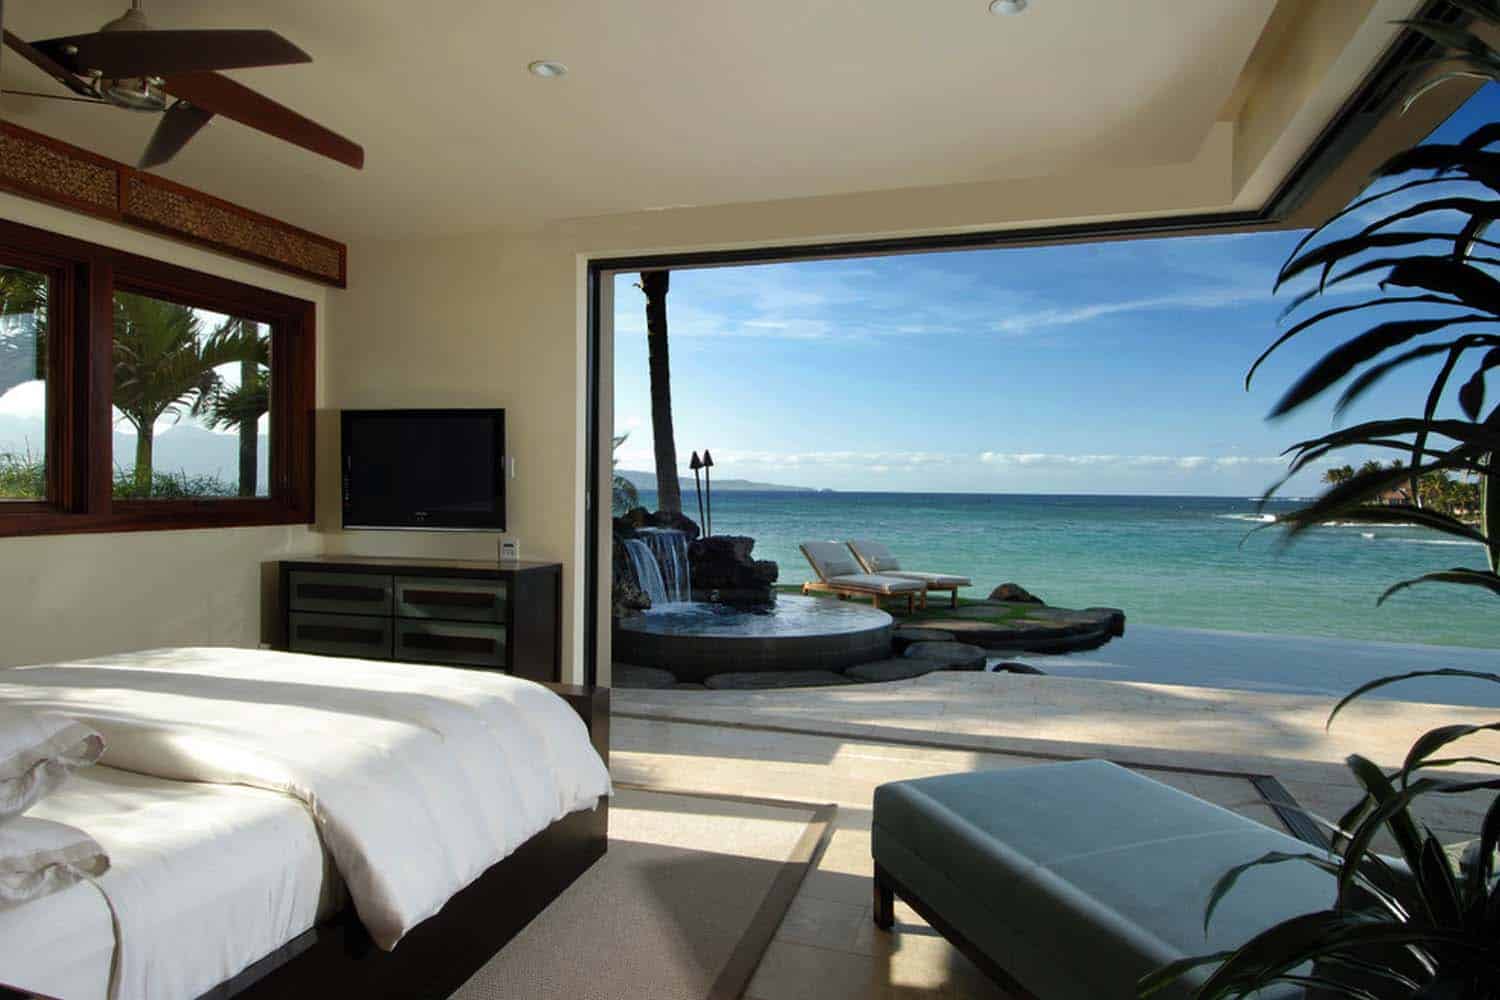 Bedroom With Ocean Views-03-1 Kindesign